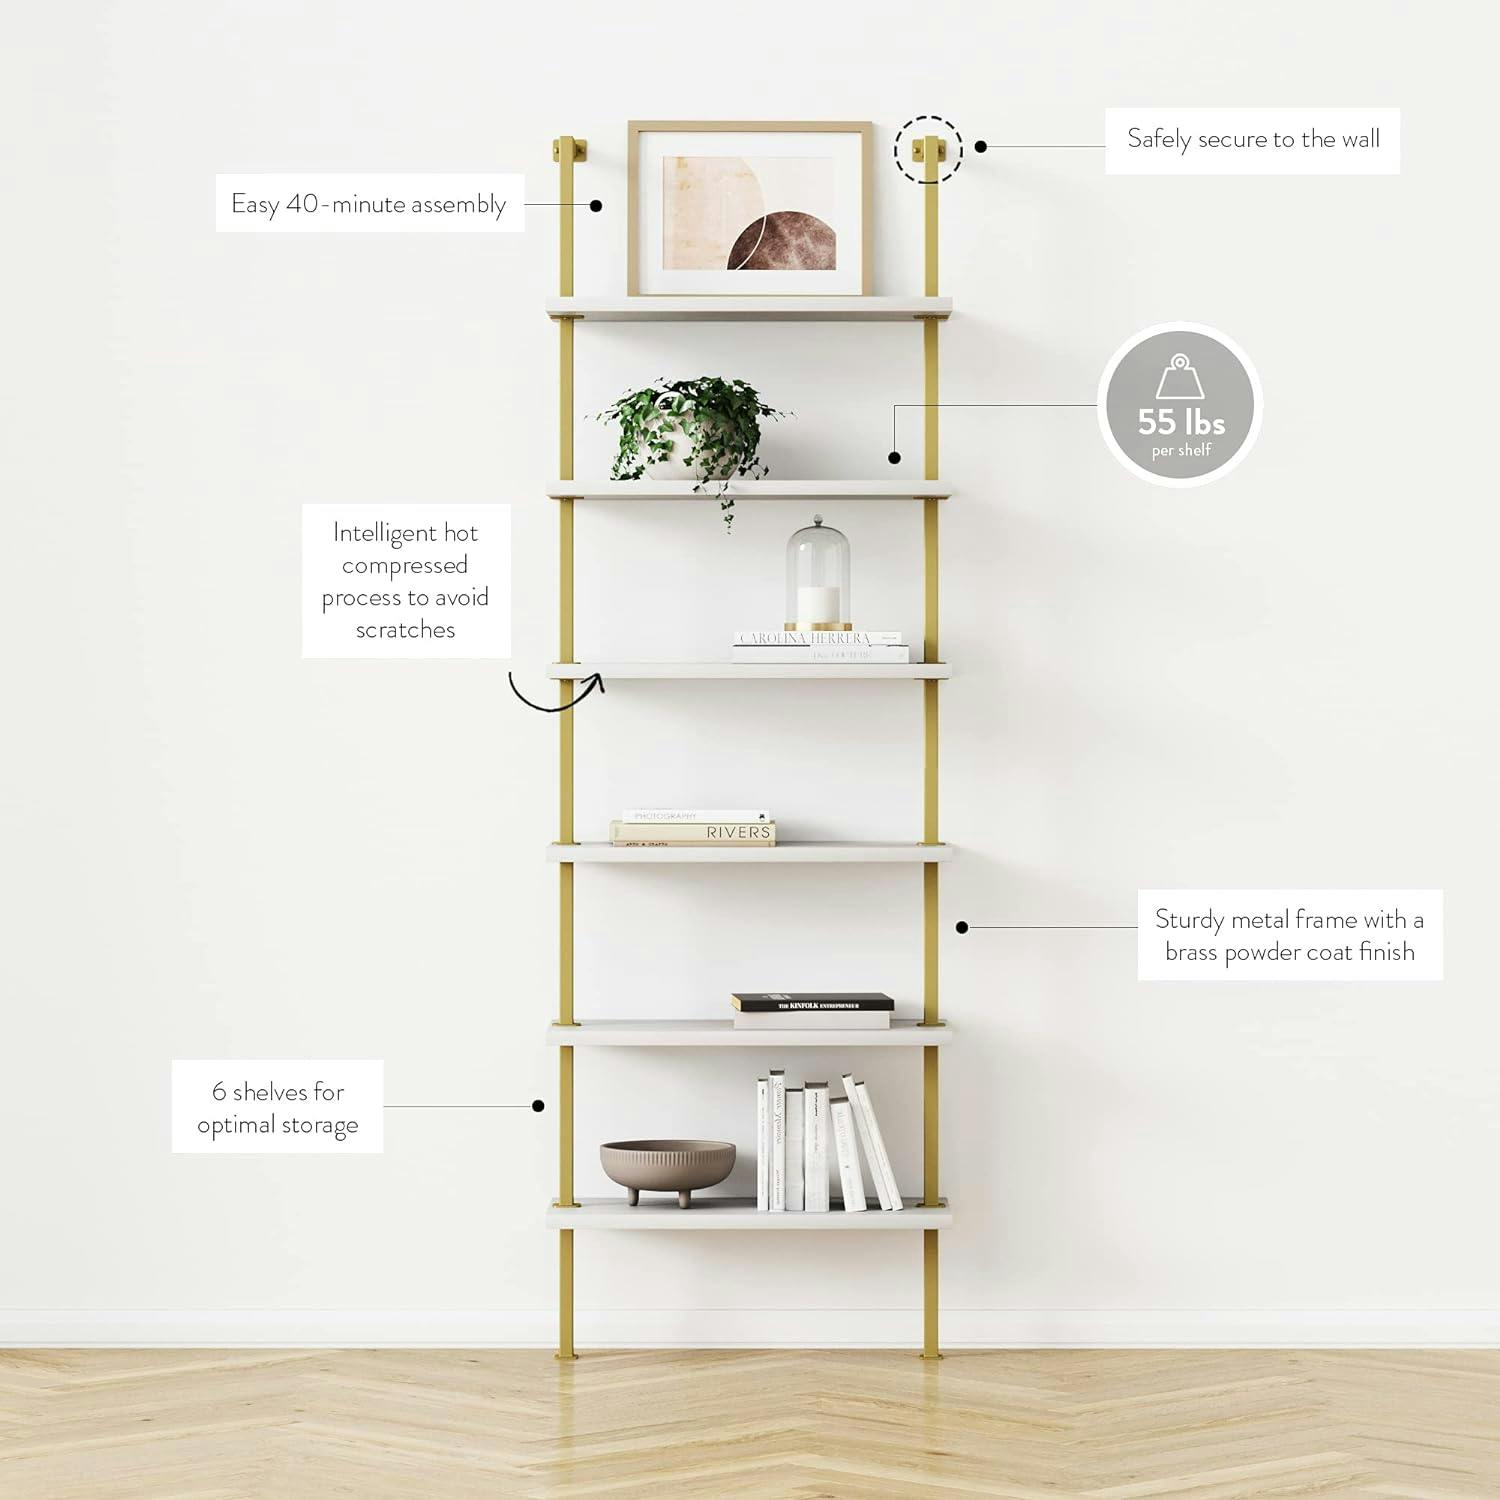 Eloise White and Gold 6-Tier Wood Ladder Bookshelf